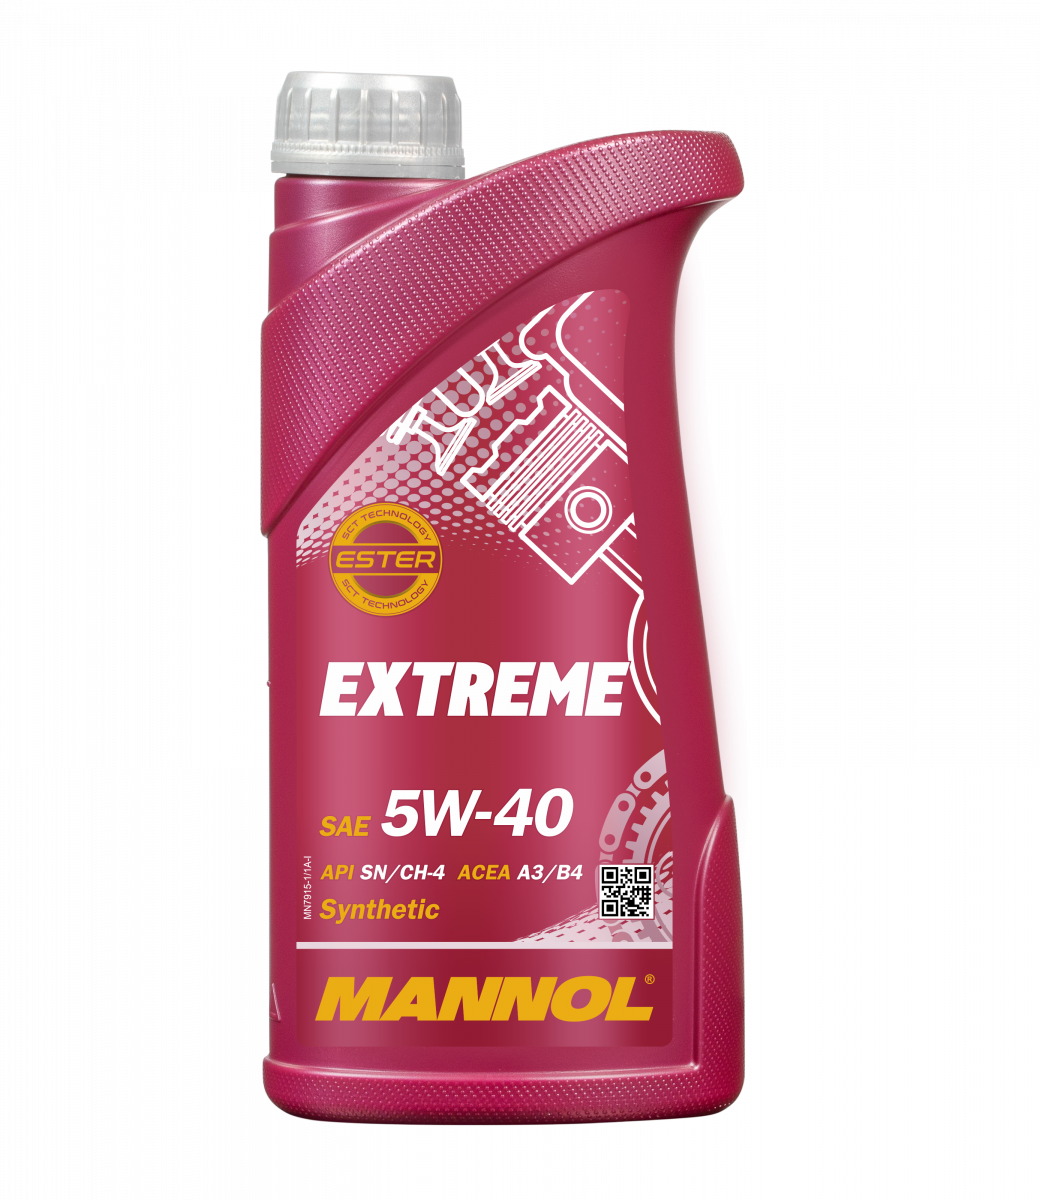 mannol extreme 5w-40